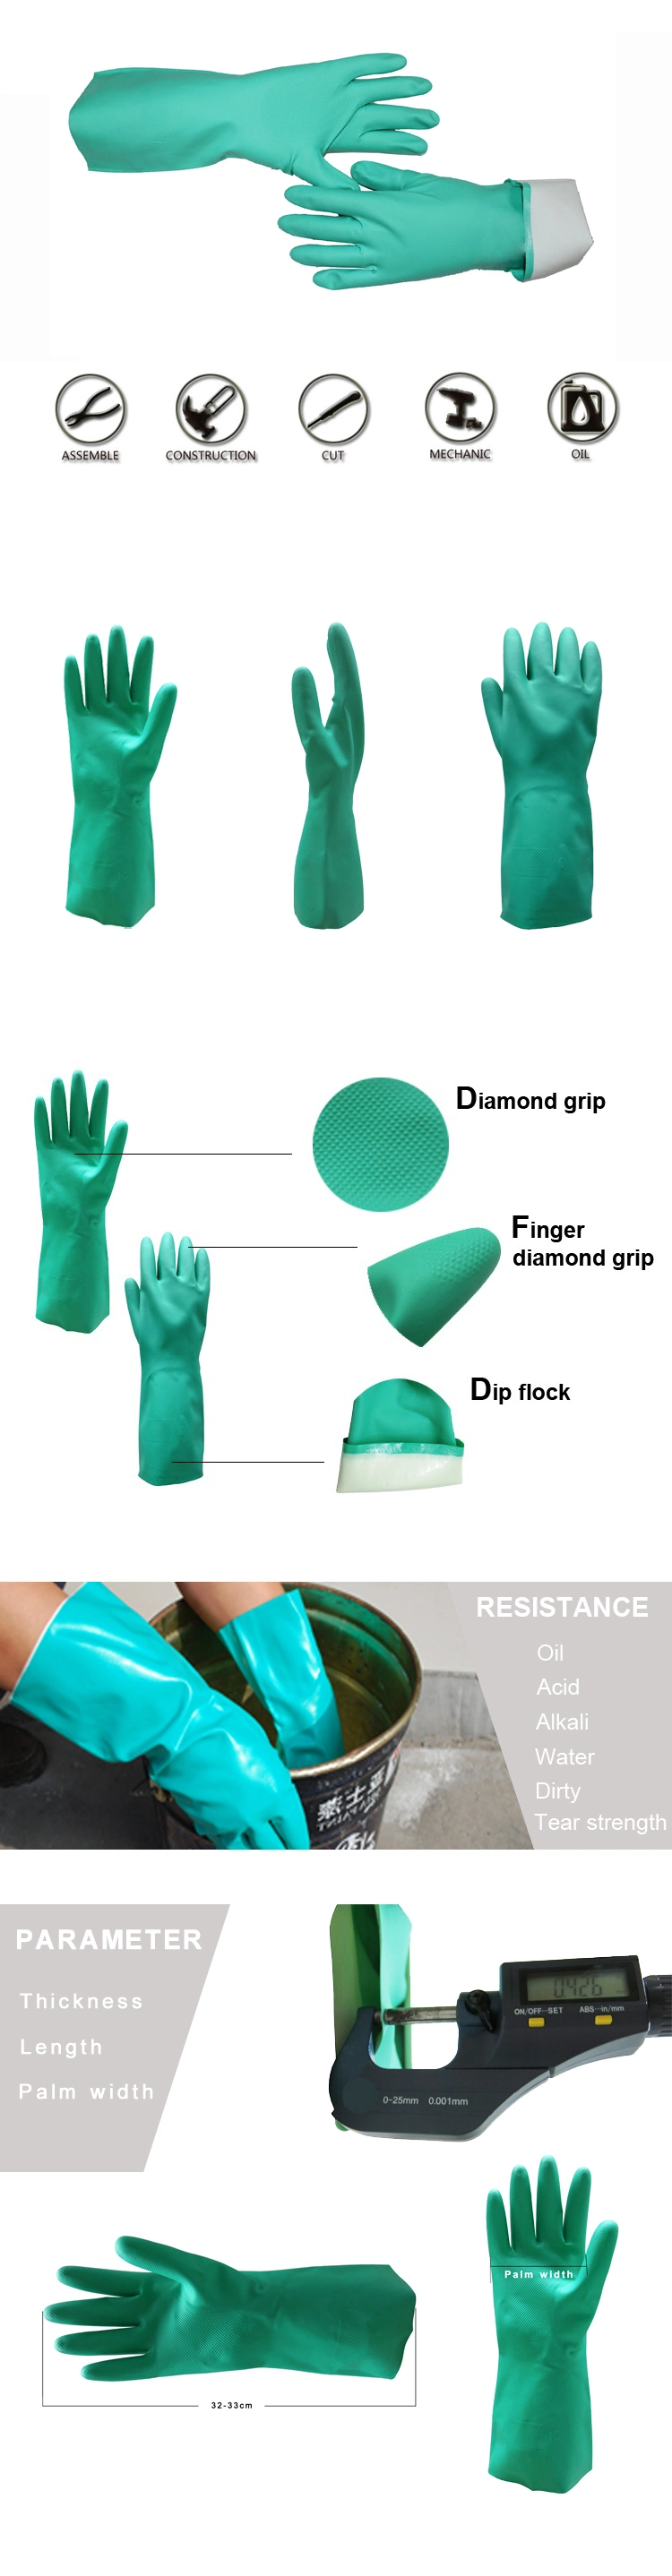 Guantes De Nitrilo Industria, Green Nitrile Gloves for Chemical Resistance Purpose